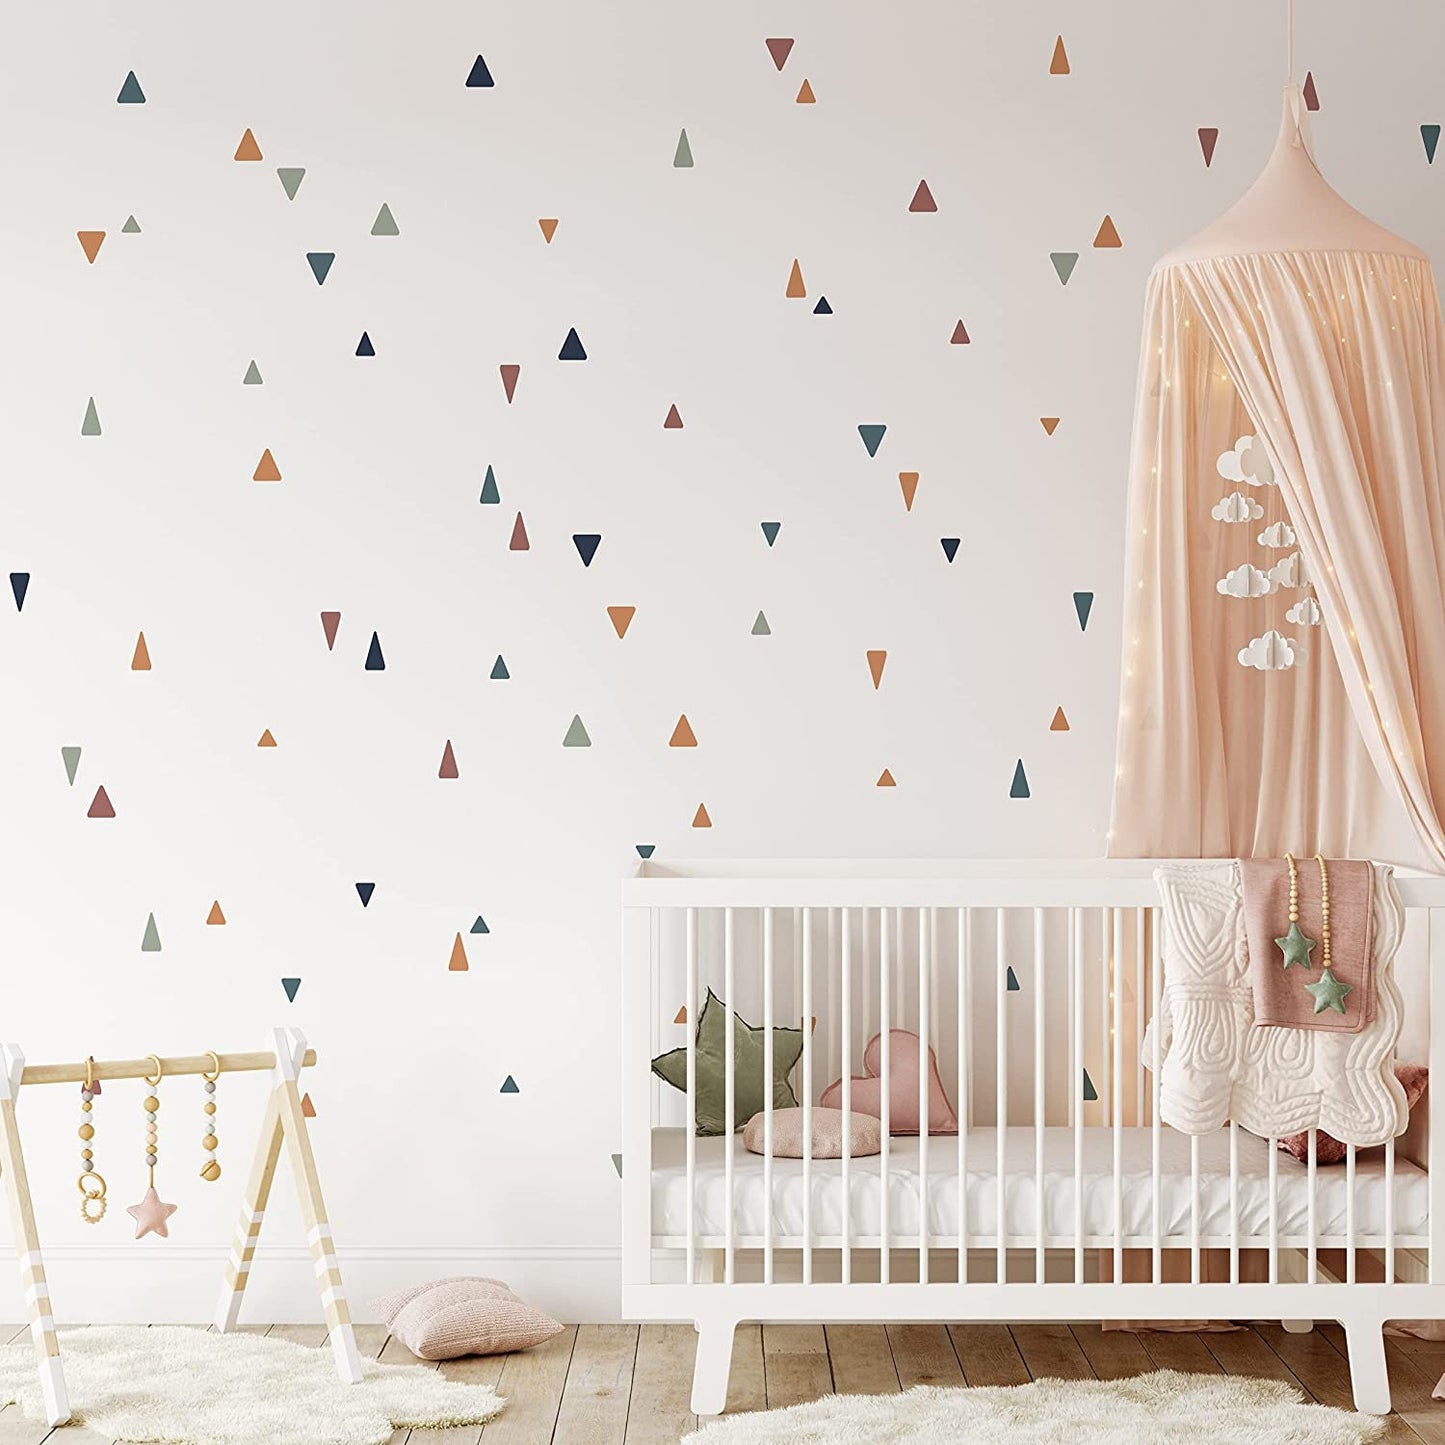 Kids Boho Wall Stickers | Boho Chic Wall Art Decals For Nursery Rooms Kids Decor